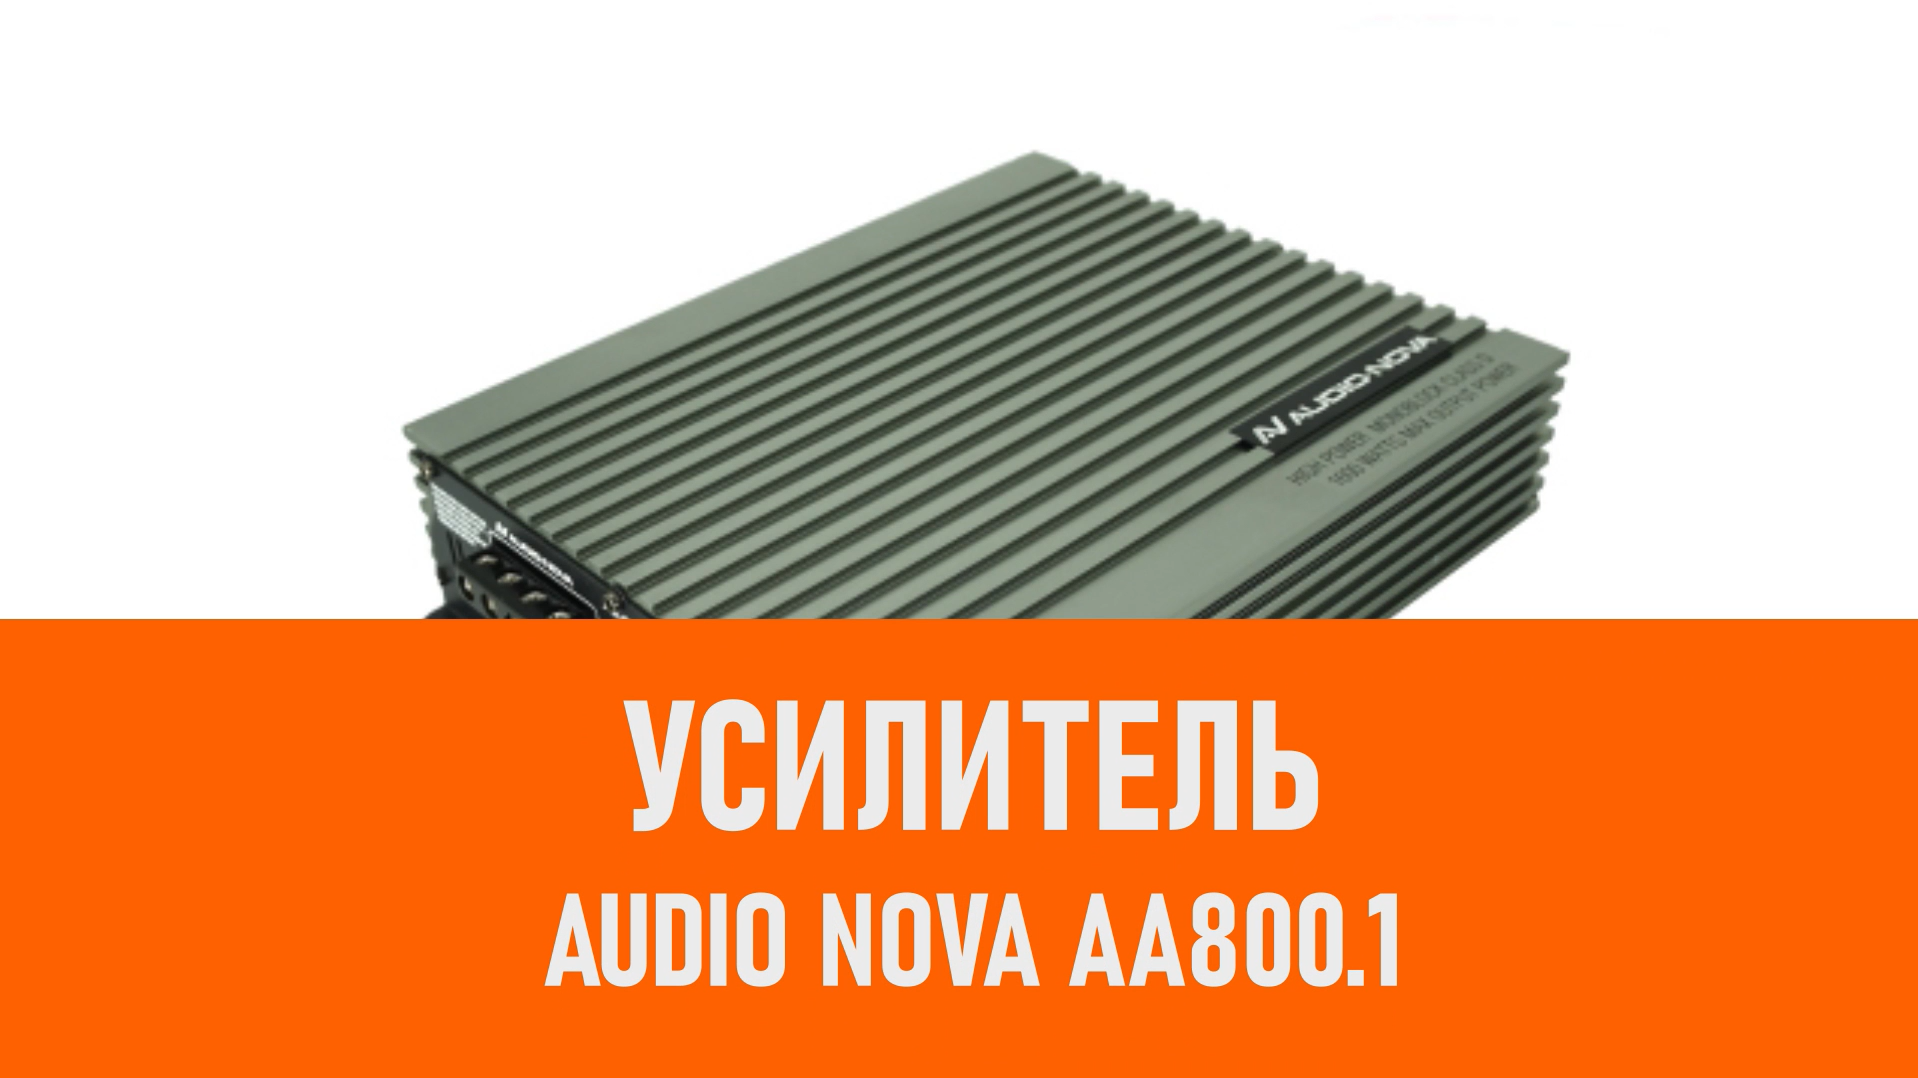 Распаковка усилителя AUDIO NOVA AA800.1